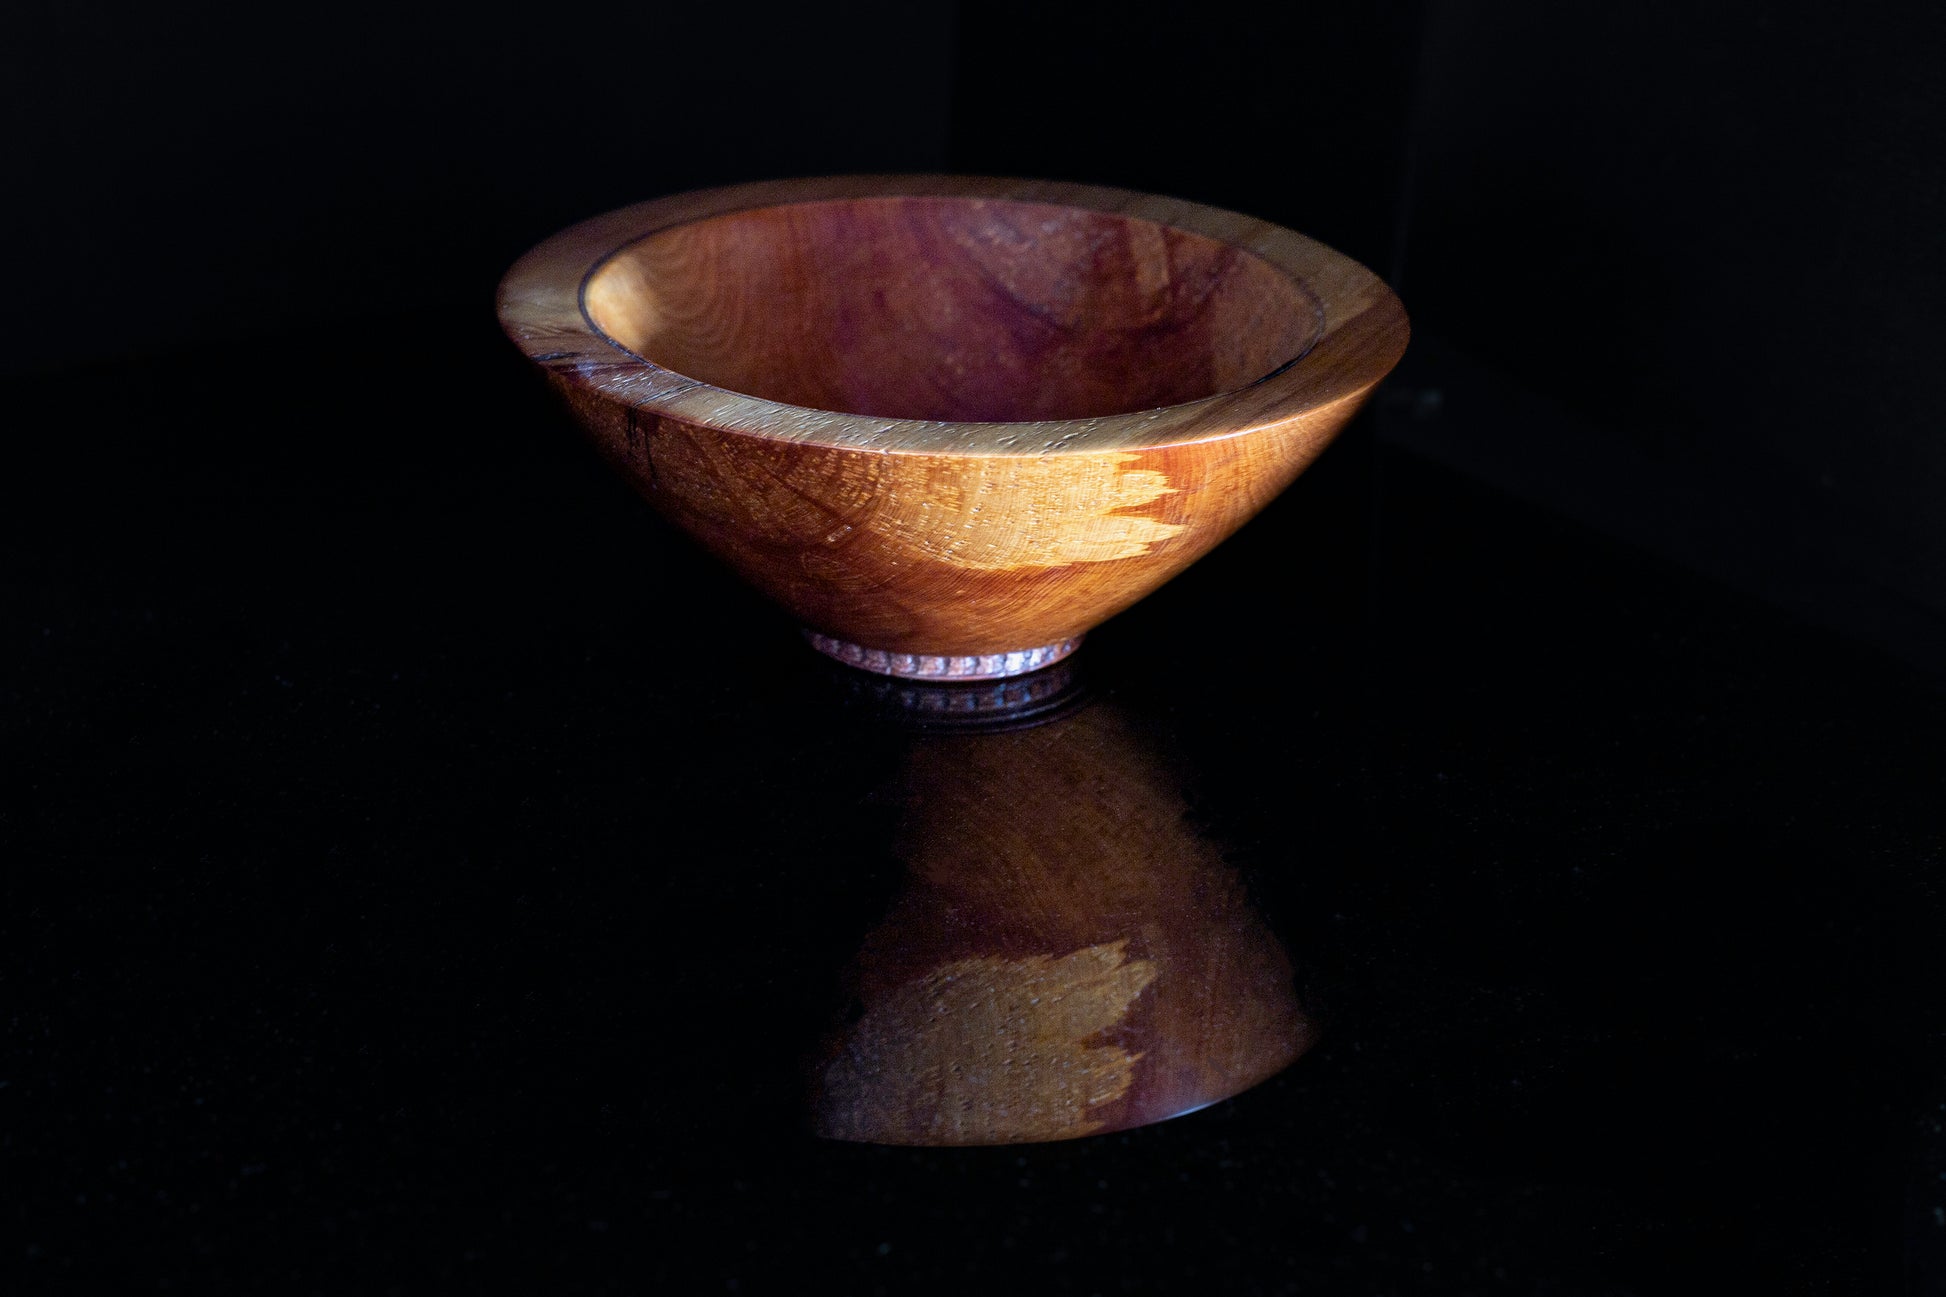 Totara Wood Bowl by Woodturner Mark Russell No335